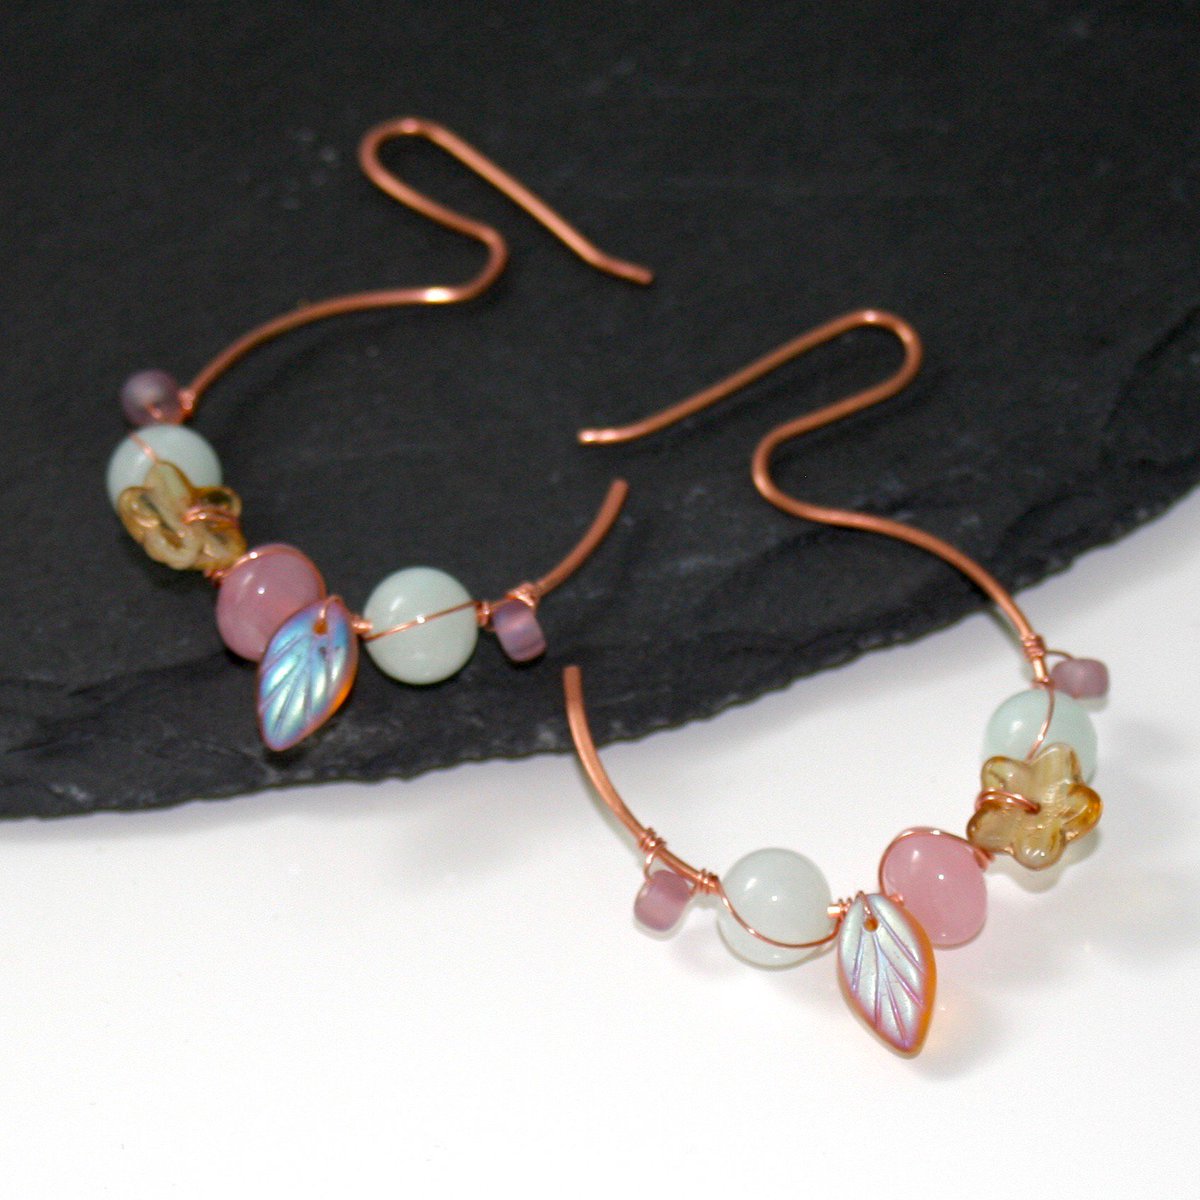 Some flower-inspired earrings from me today folksy.com/items/7007515-… #flowers #folksy #folksy365 #copperanniversary #handmadejewelry